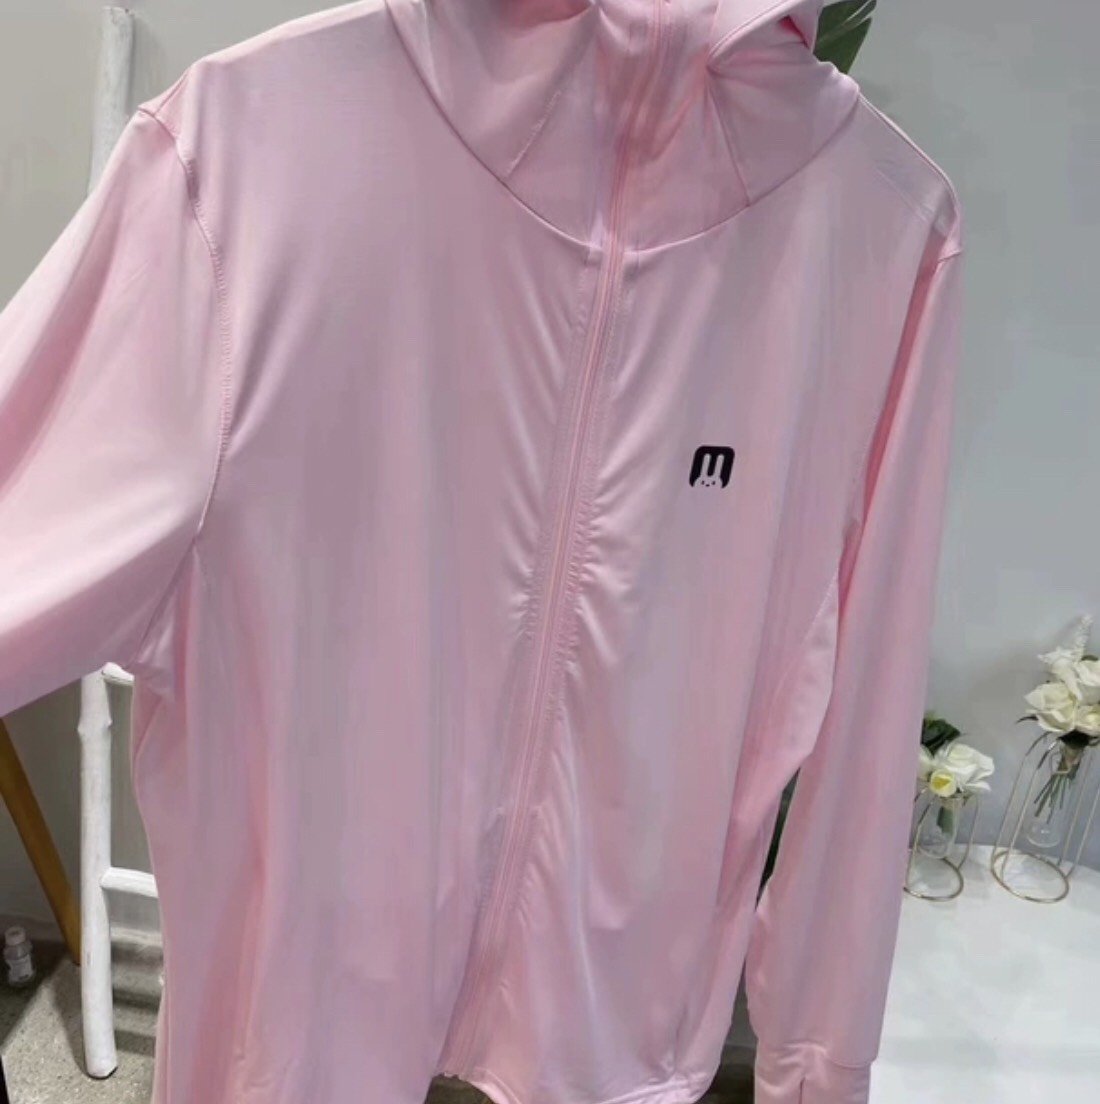 YOHO 涼感防曬外套 (OIM0605-17) 日本訂單冰絲防曬外套 長袖薄款抗UV外套有4色